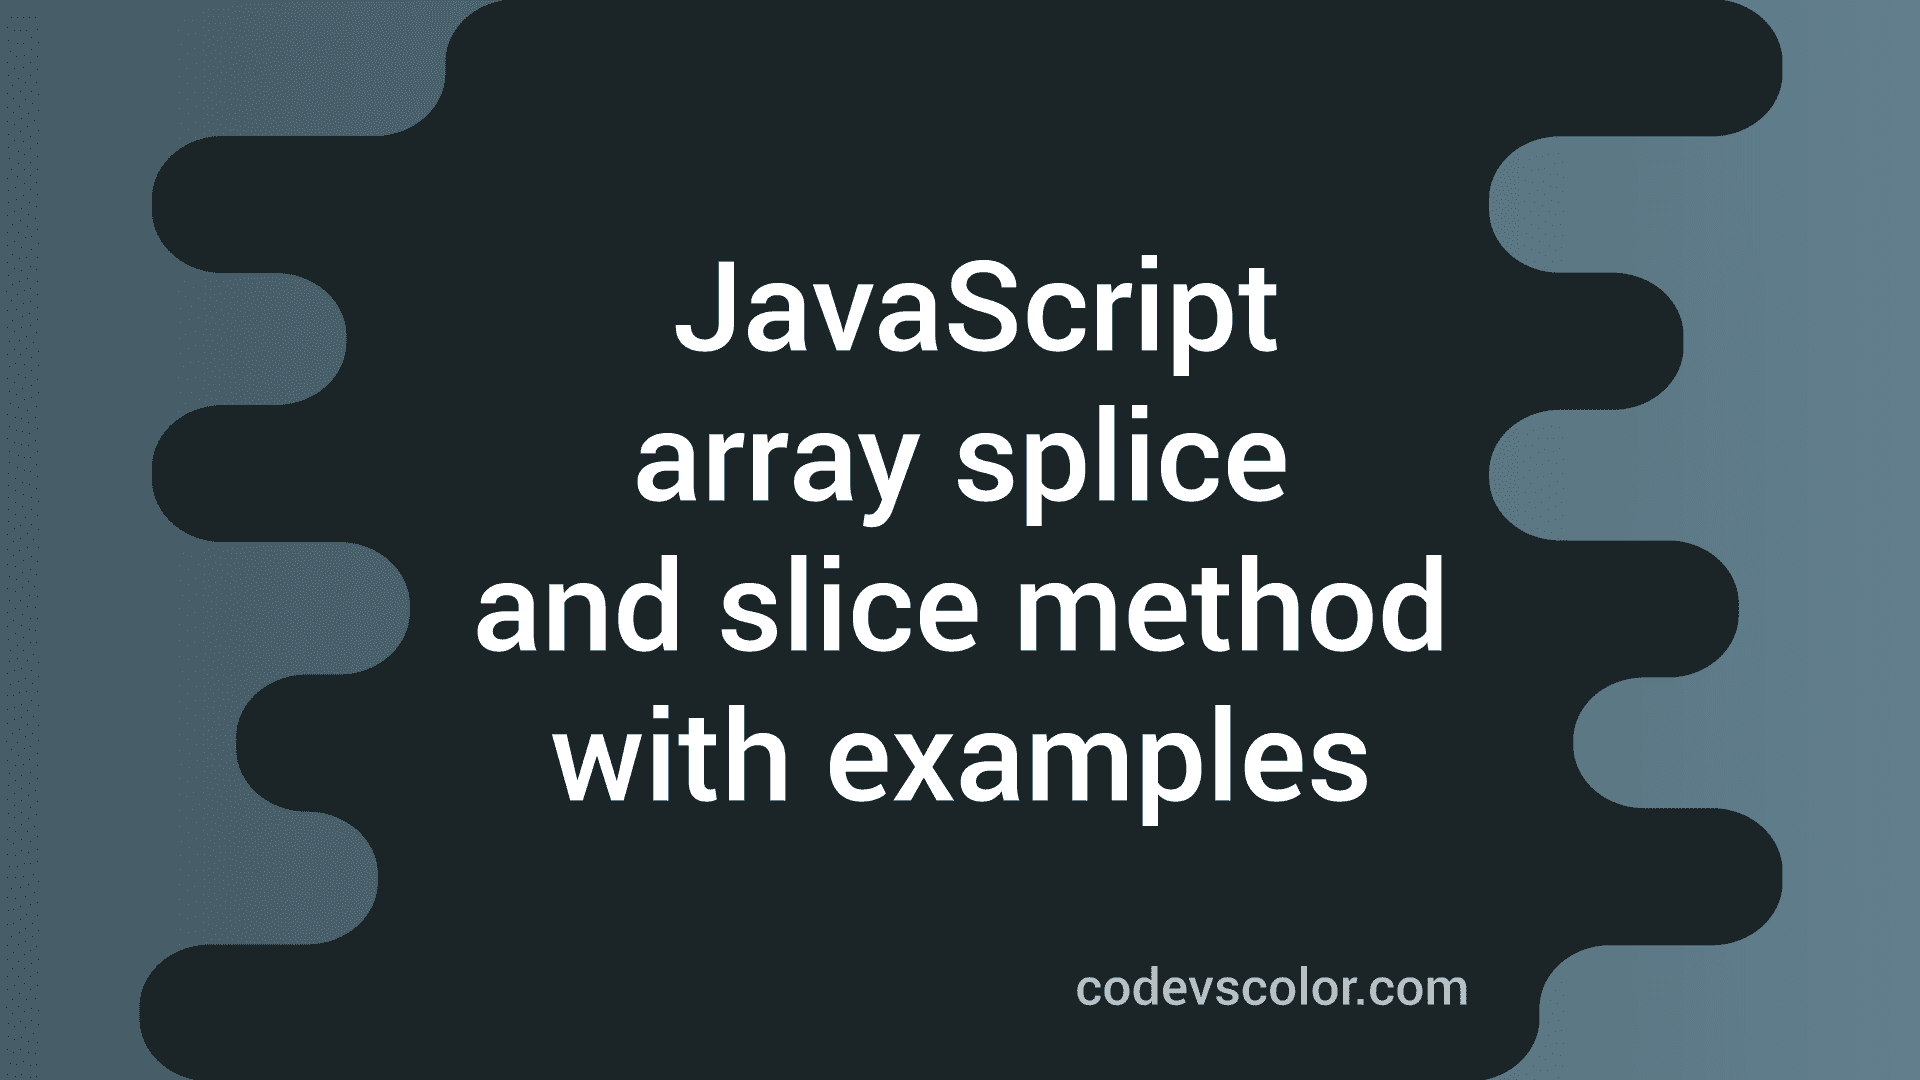 tutorialspoint javascript array splice